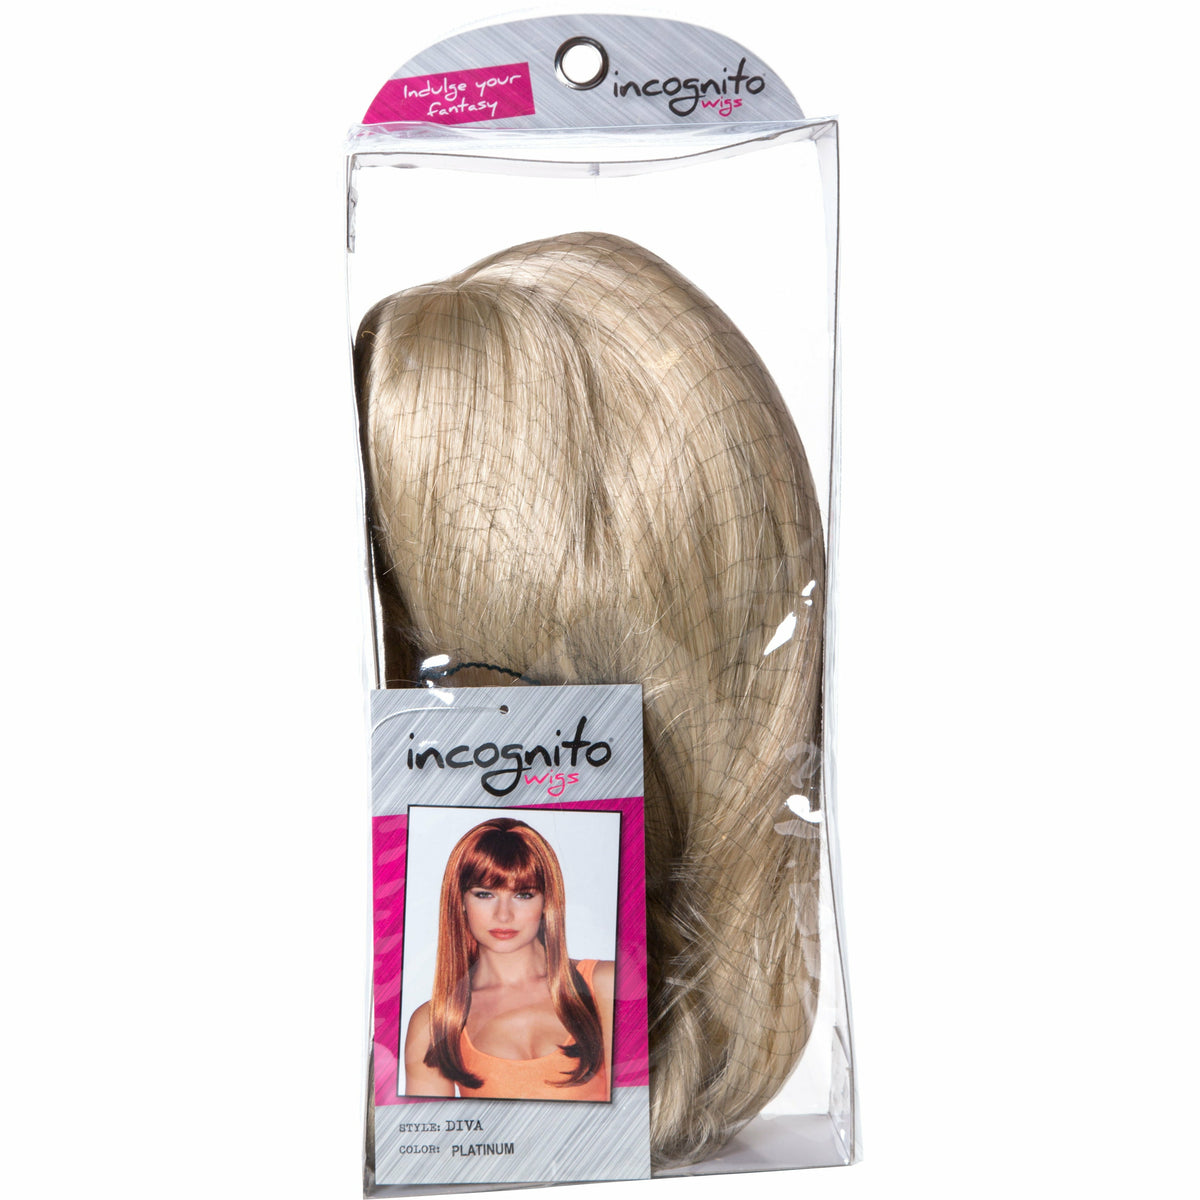 Incognito Wigs Costume Wig - Diva - Platinum